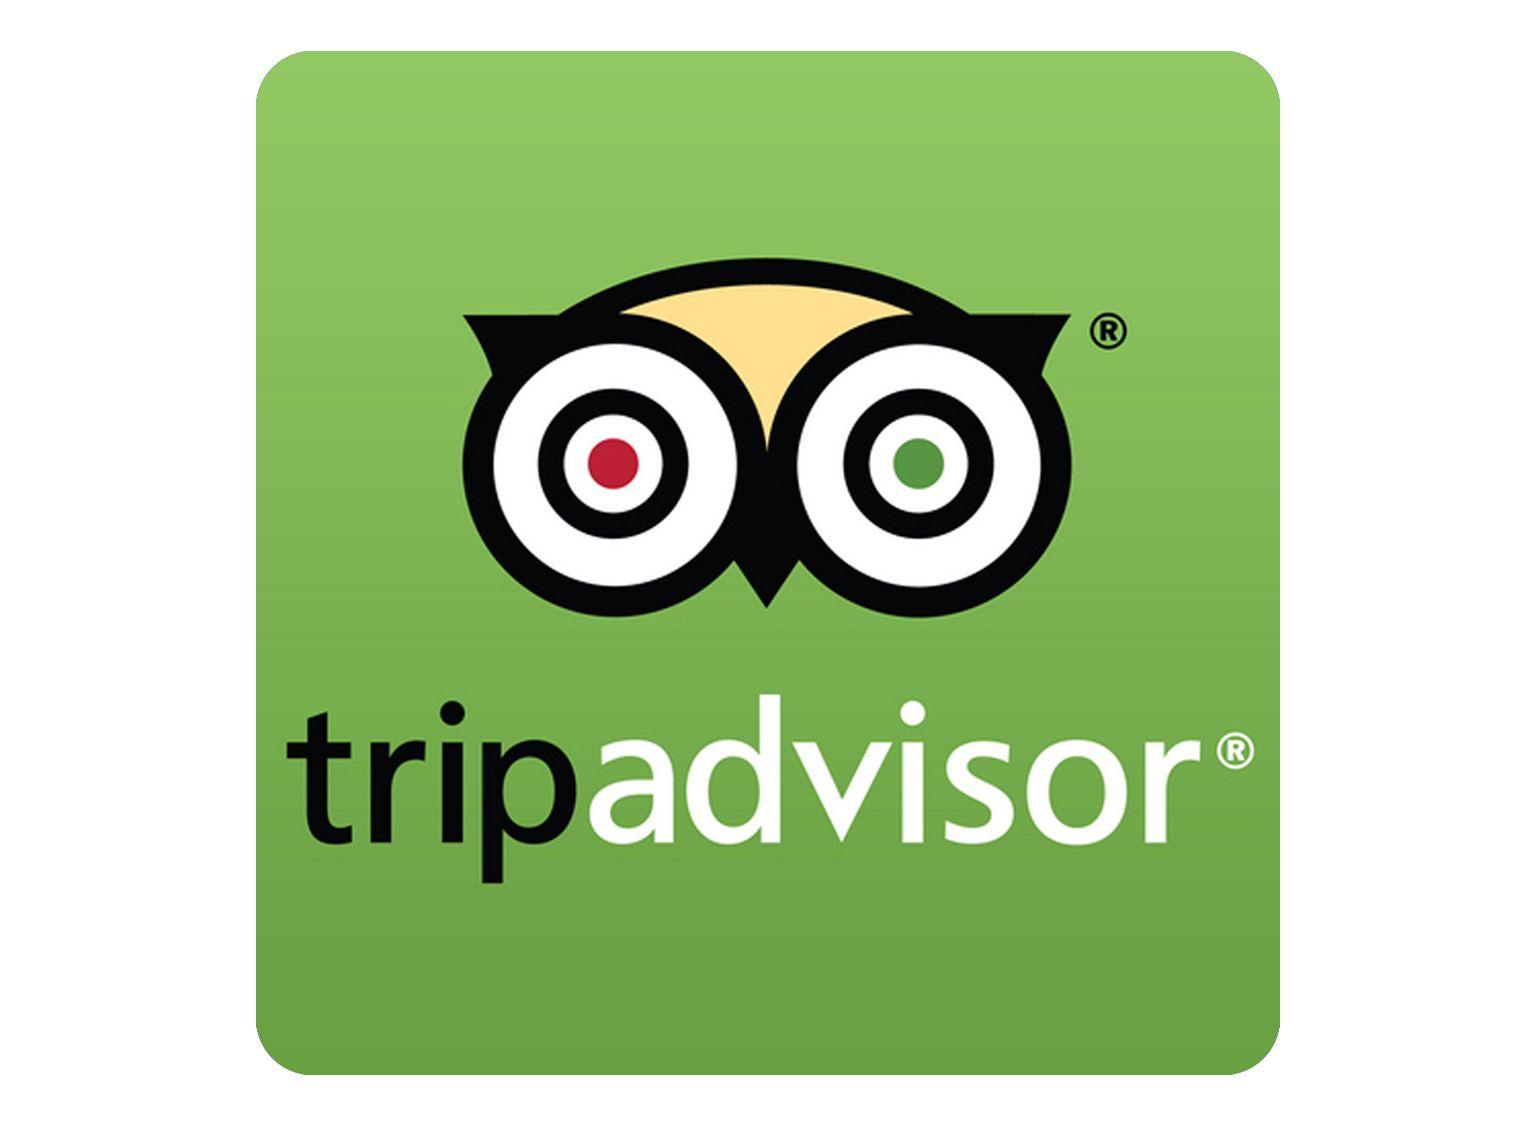 TripAdvisor App Logo - Free Tripadvisor Icon Vector 294553. Download Tripadvisor Icon